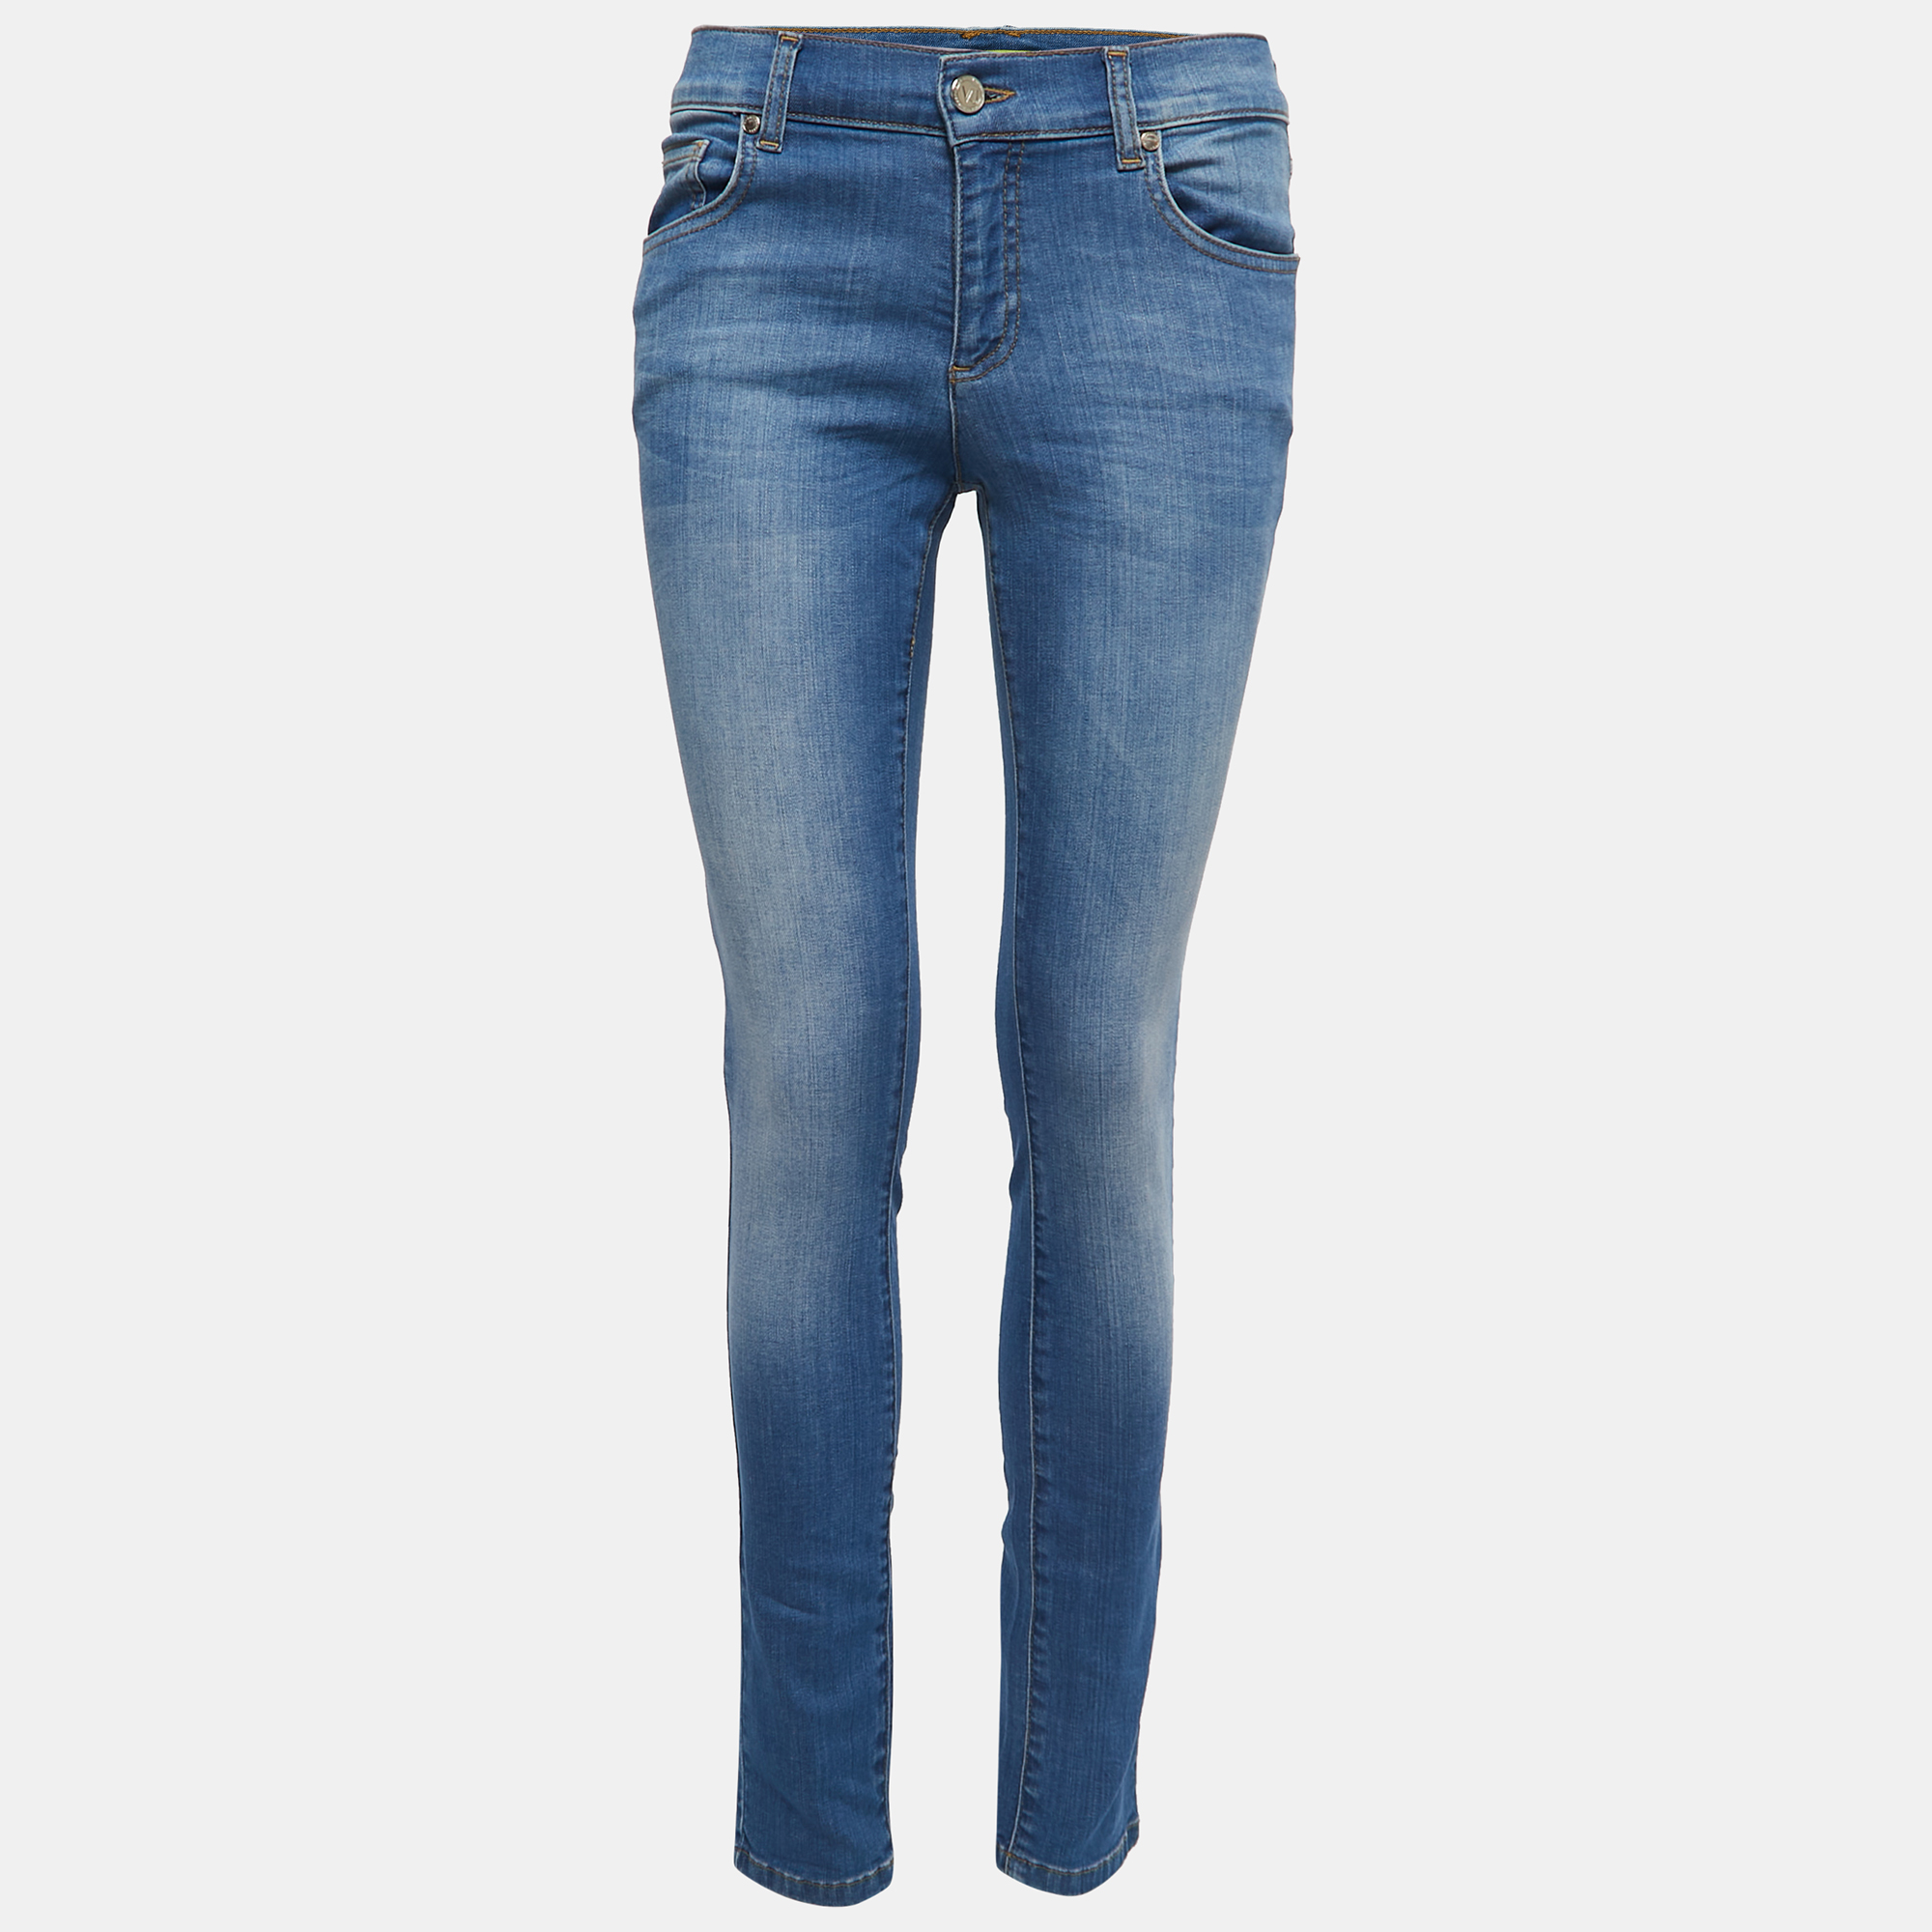 

Versace Jeans Blue Washed Denim Skinny Jeans S Waist 28"